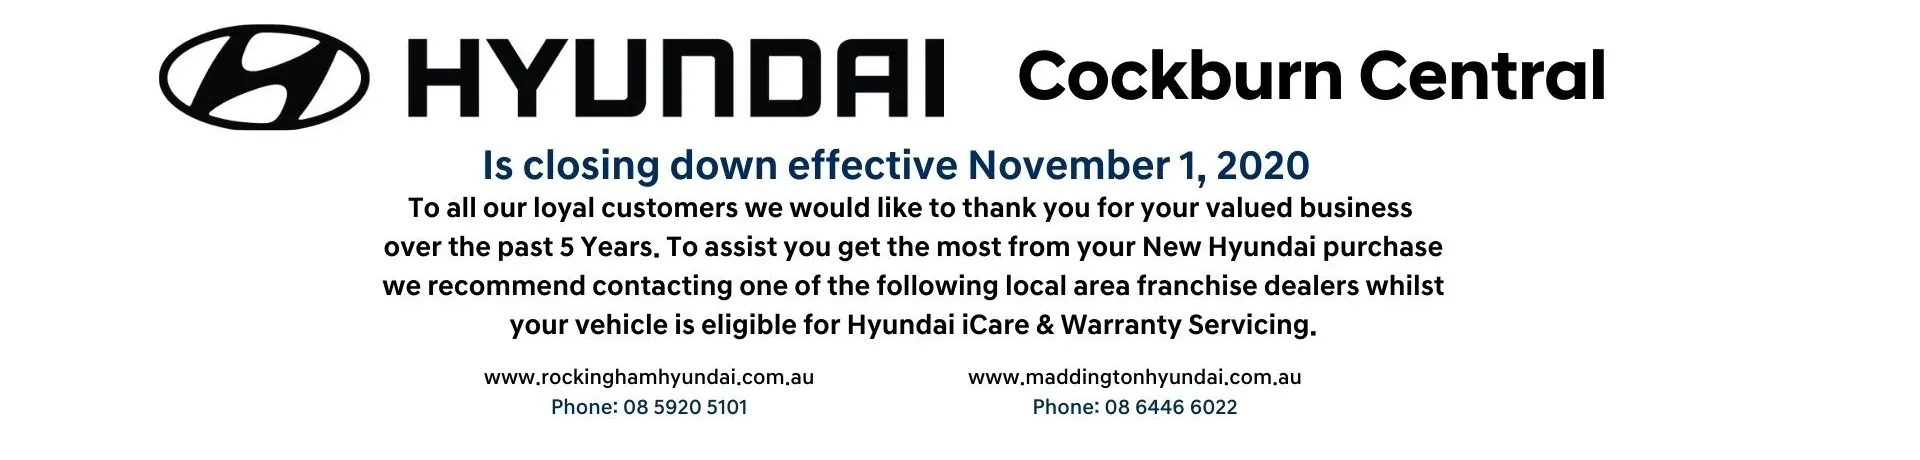 Cockburn Central Hyundai Closes